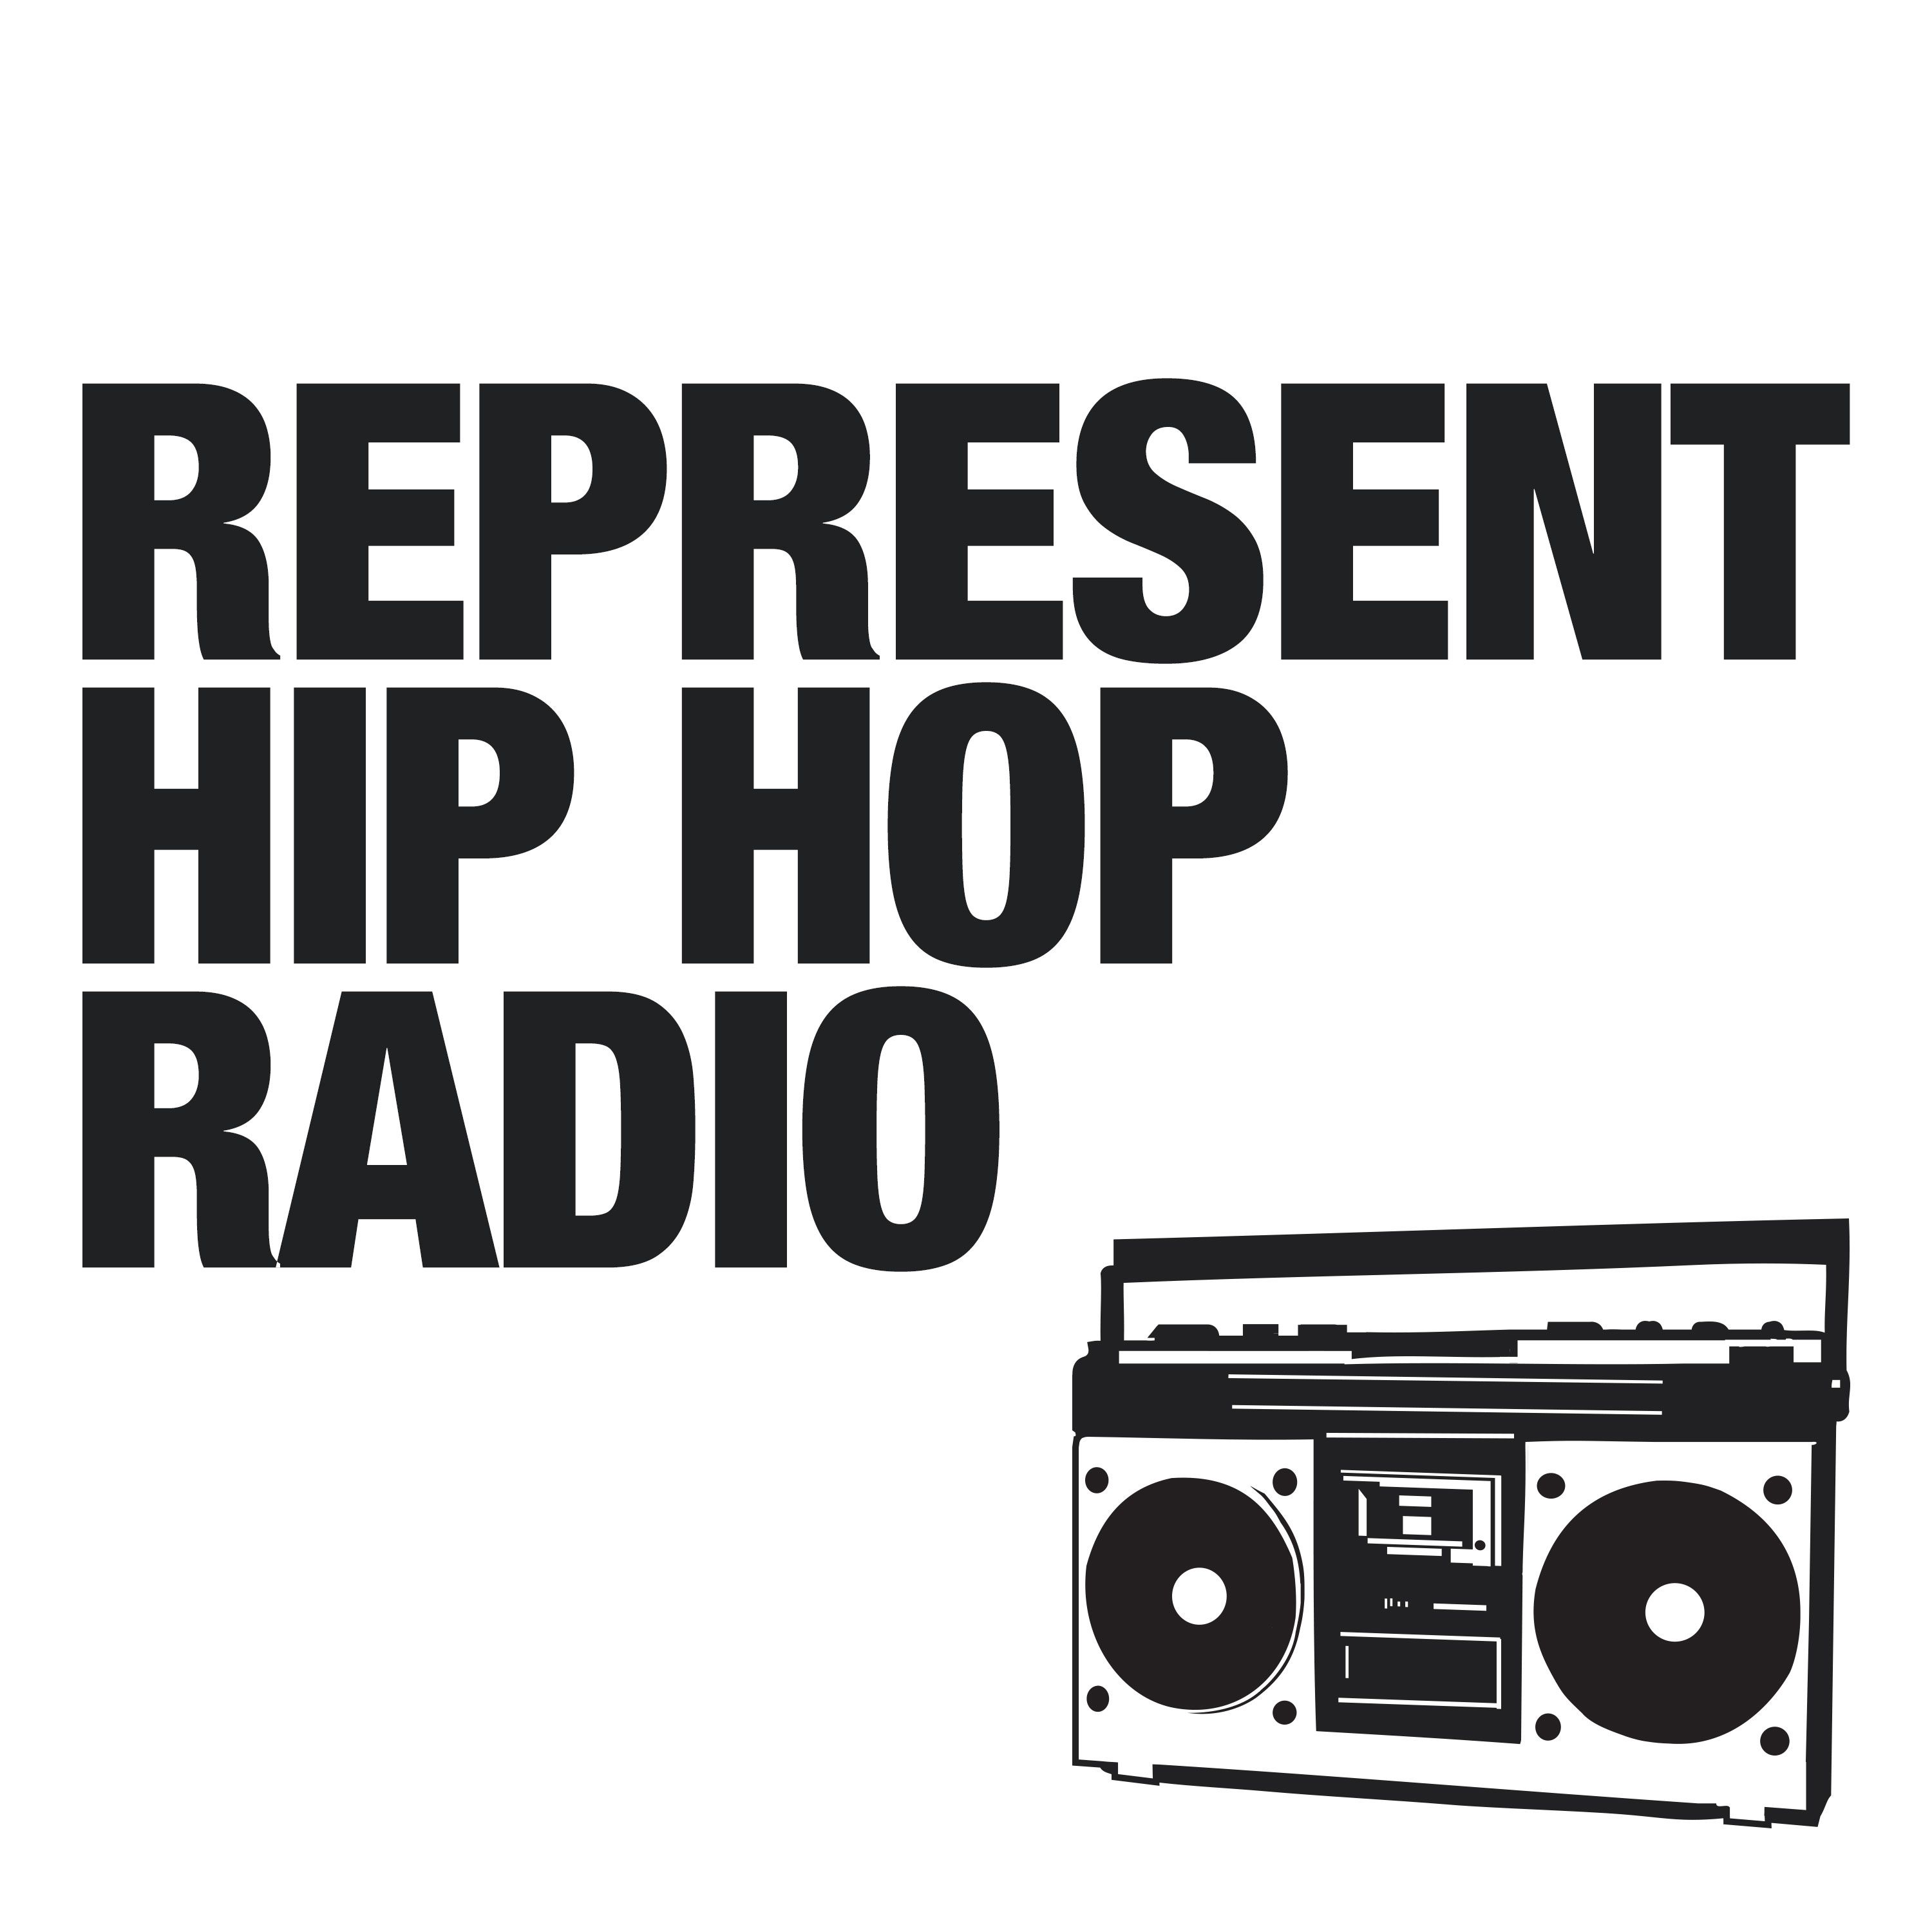 Represent Hip Hop Radio